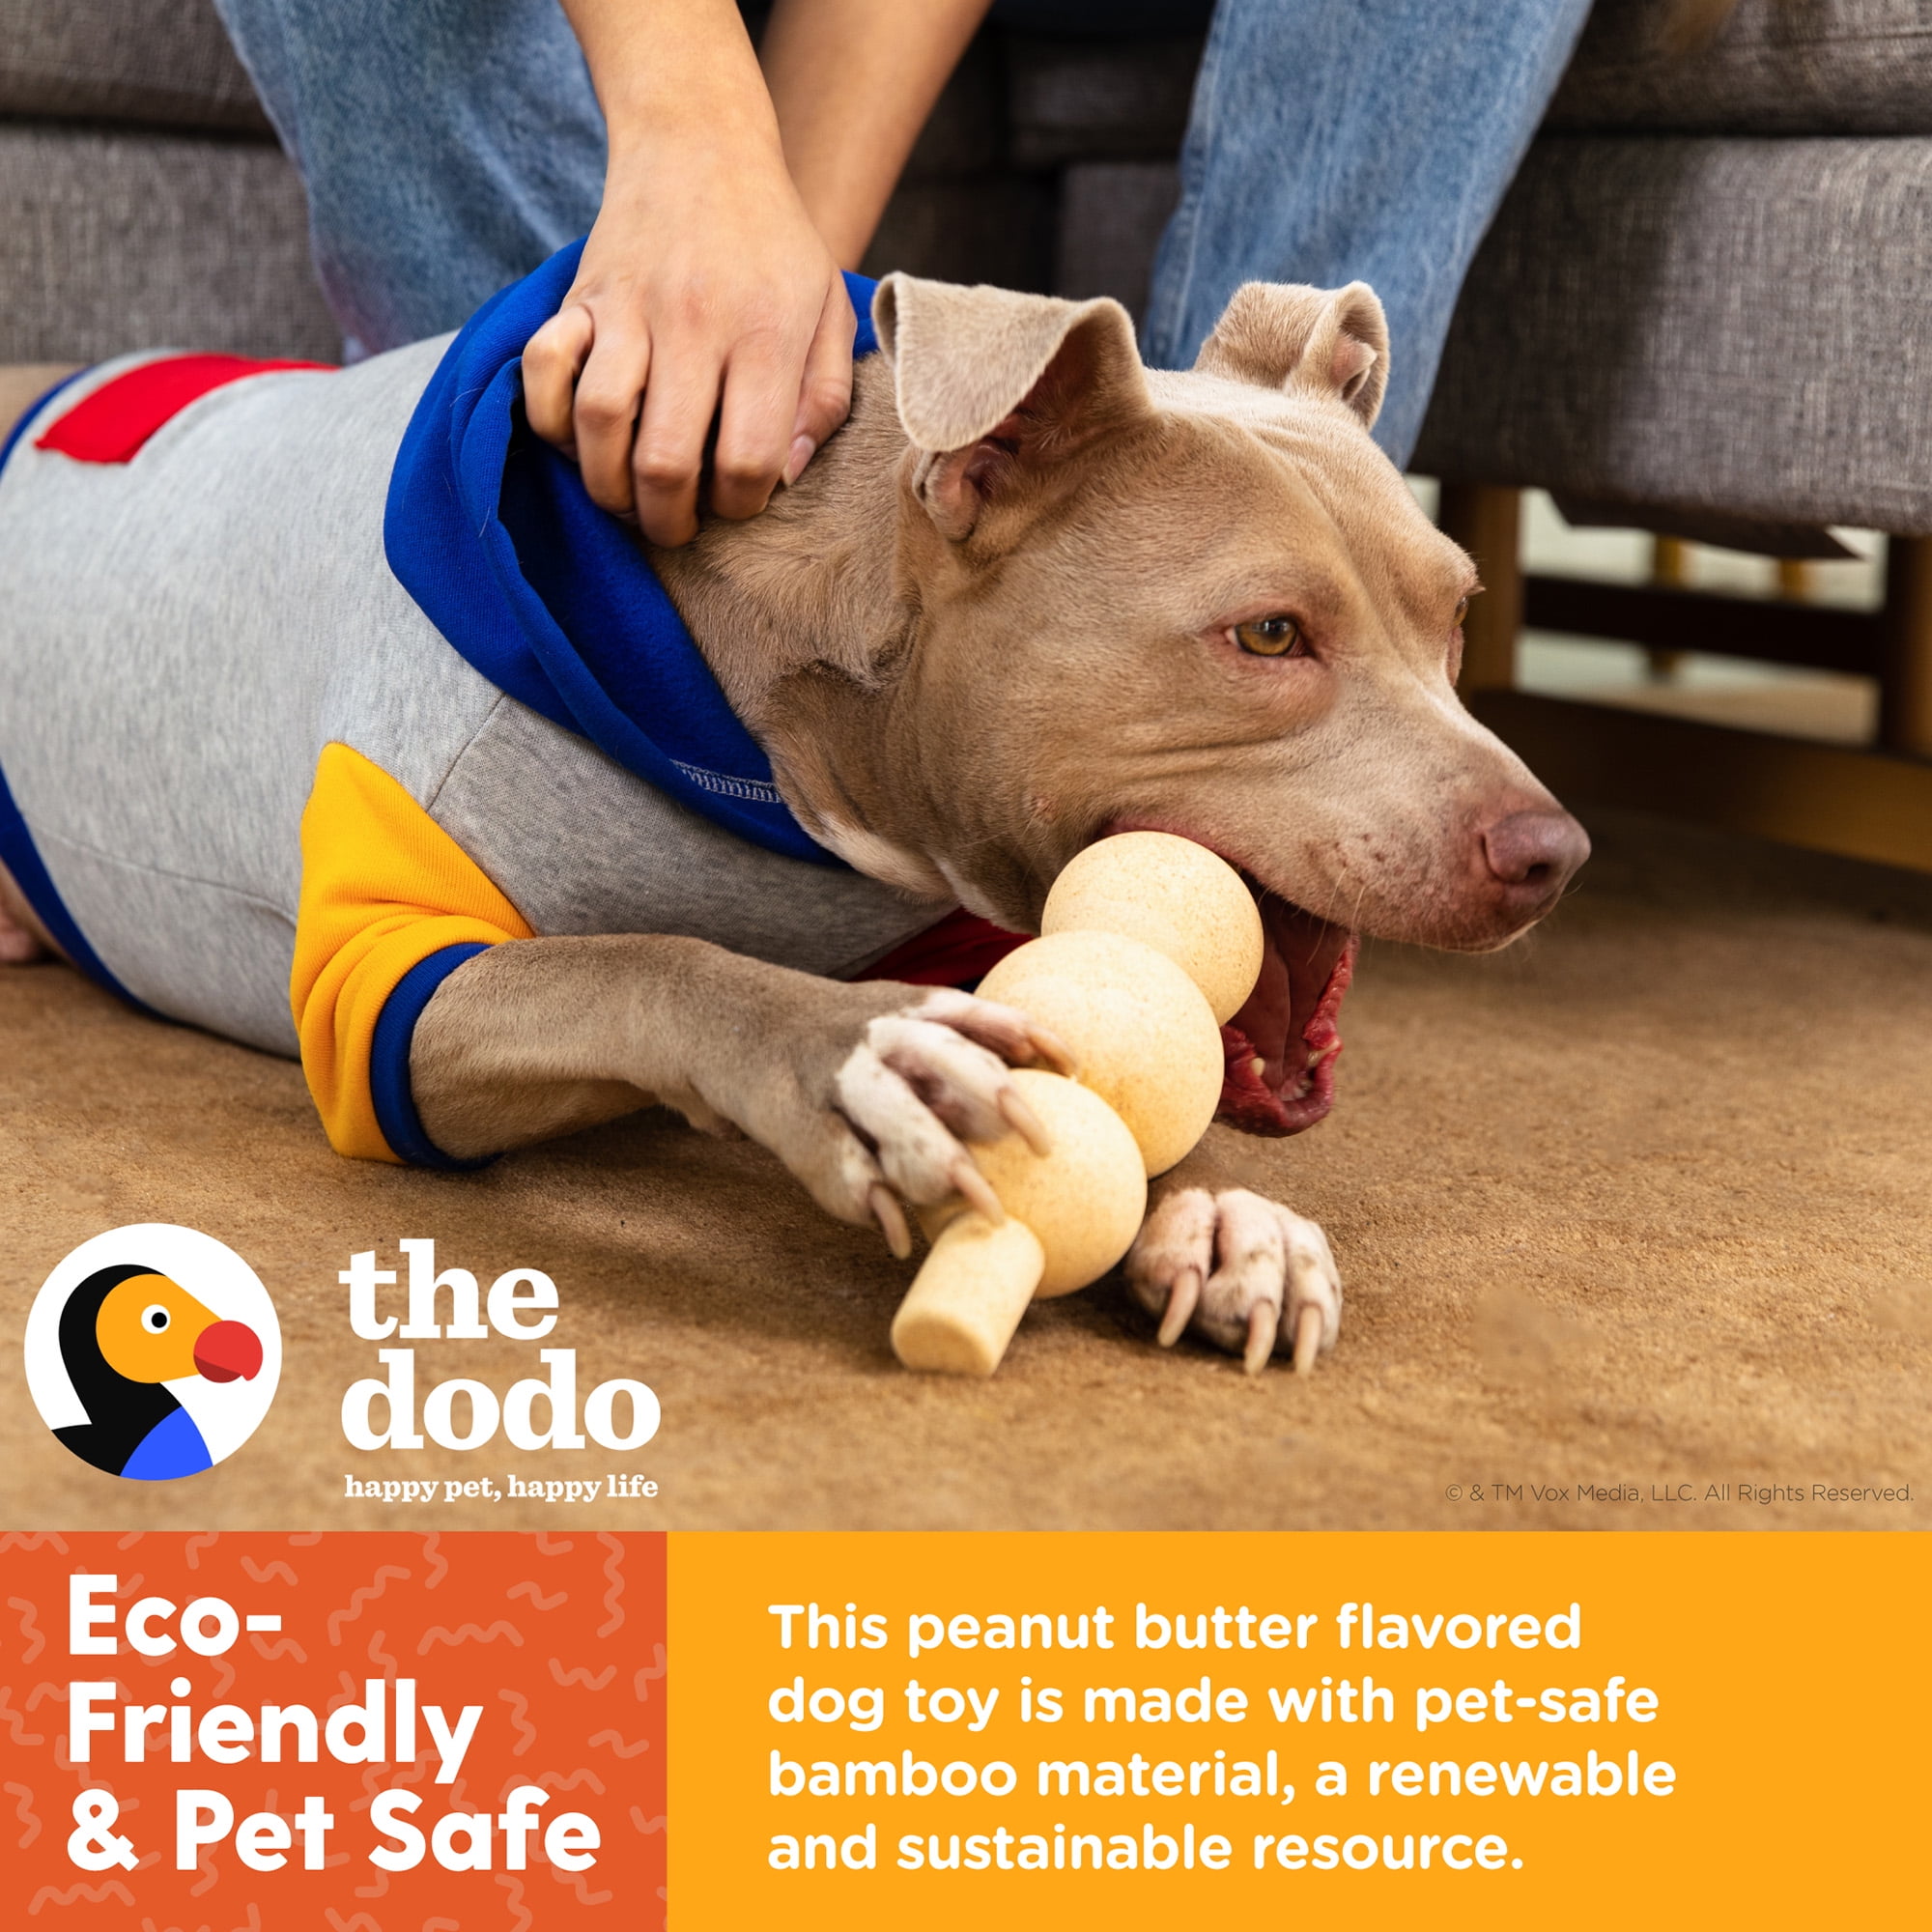 The Dodo Treat Dispensing Plush Dog Toy, Size: One Size